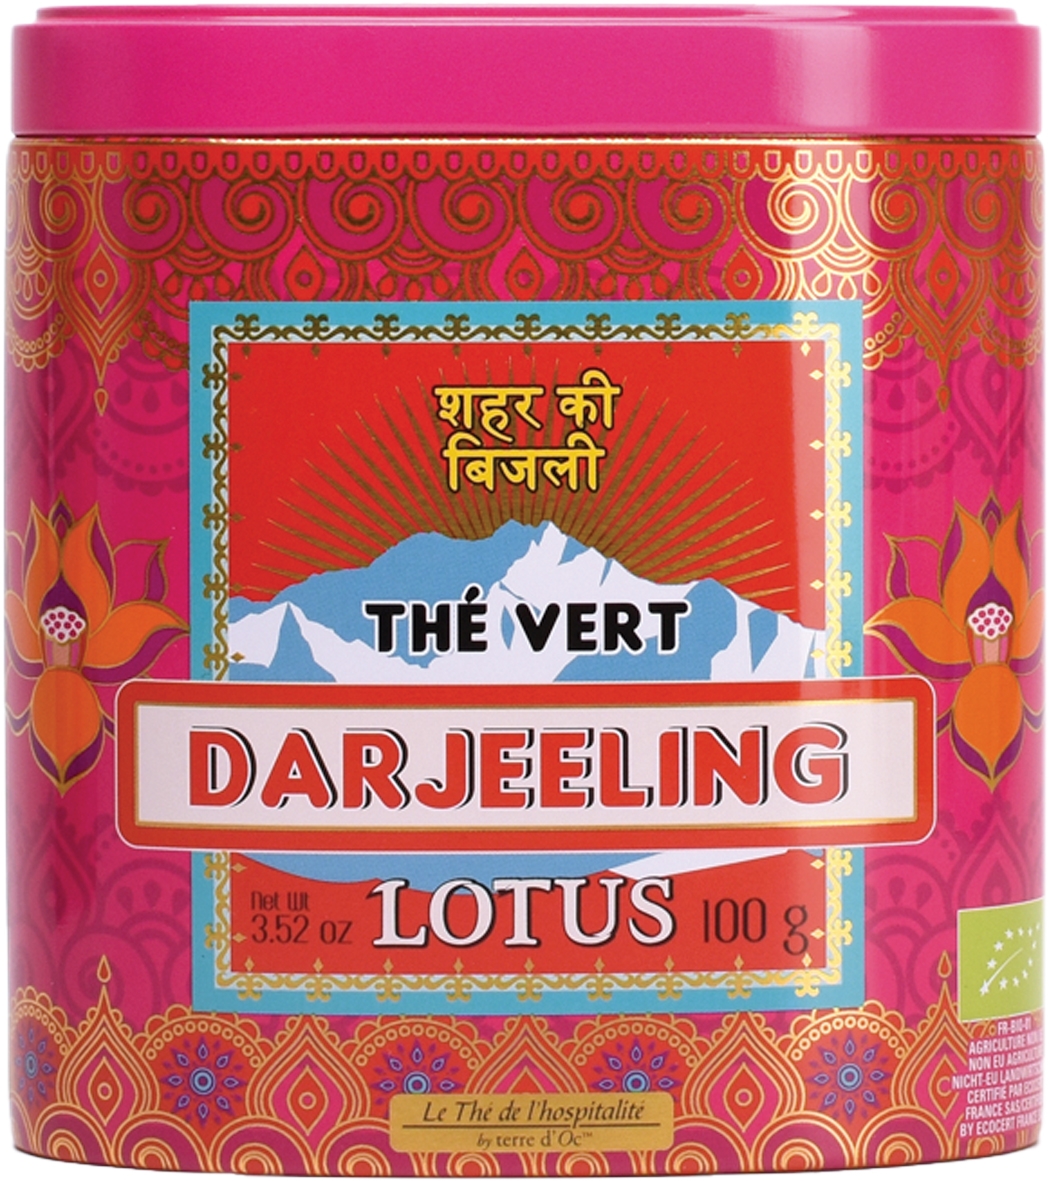 Grüner Tee "Darjeeling" Lotus - Bio 